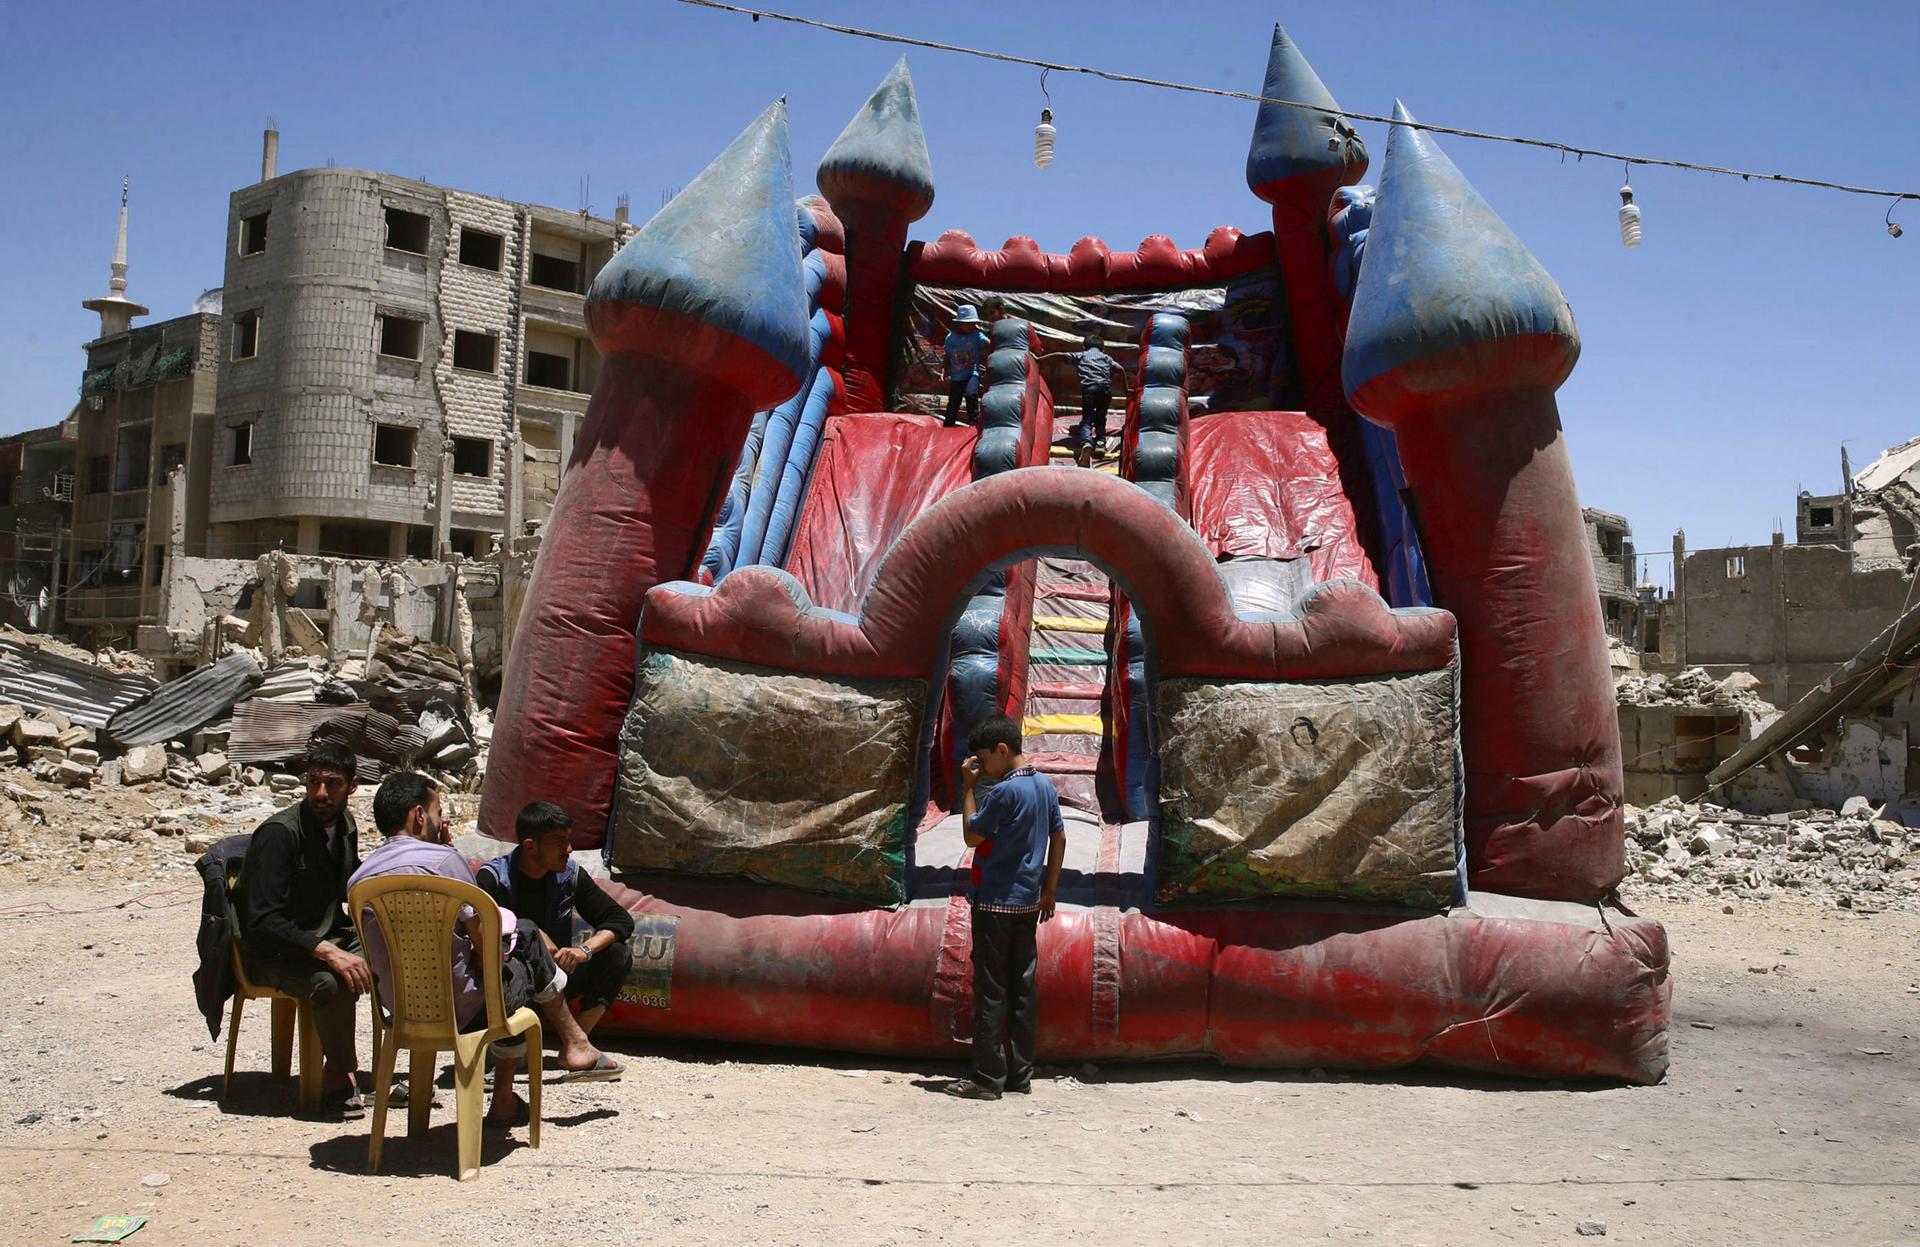 Children play inside an inflatable castle during Eid al-Fitr celebration in the Douma neighborhood of Damascus, Syria, June 26, 2017.